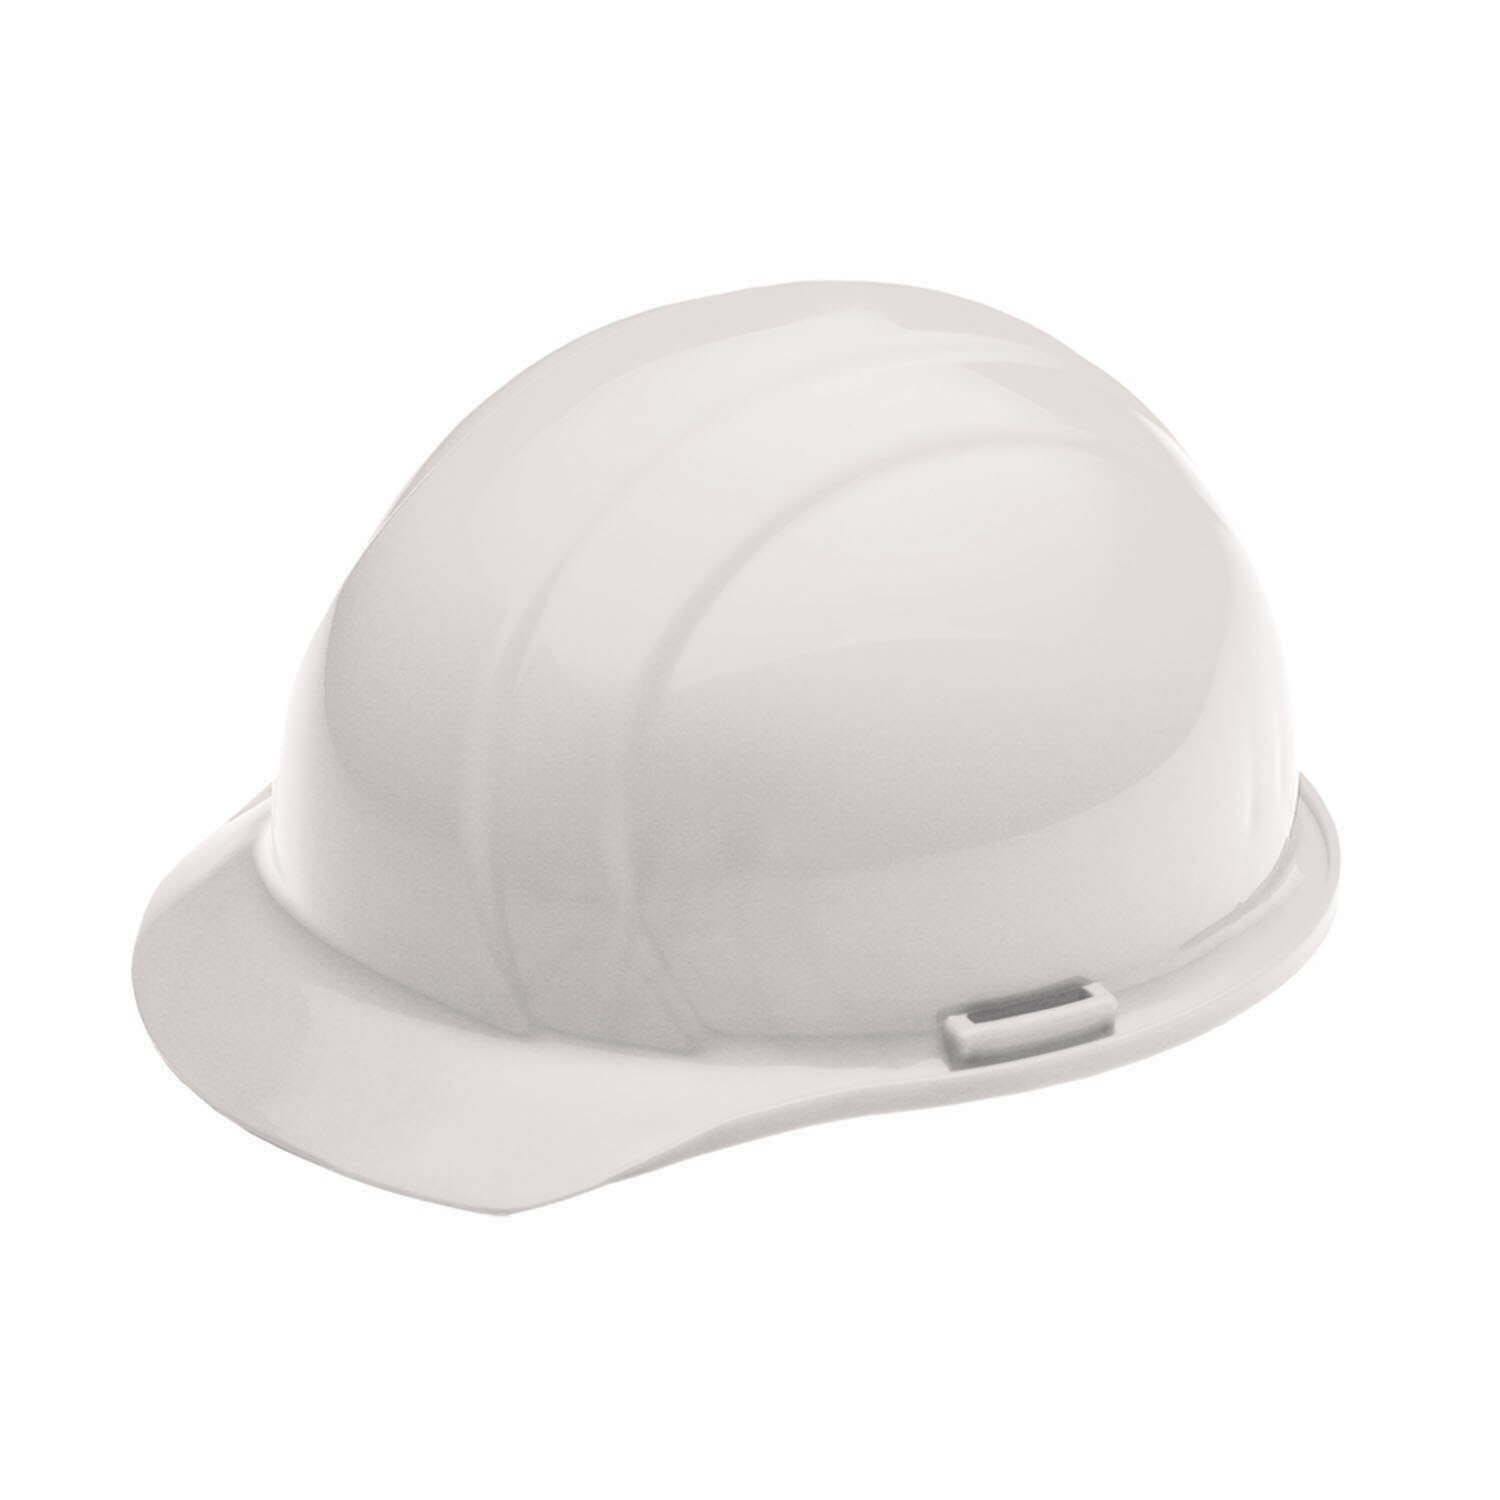 Helmet, Safety, Cap Style, White, 6-3/4" to 8"